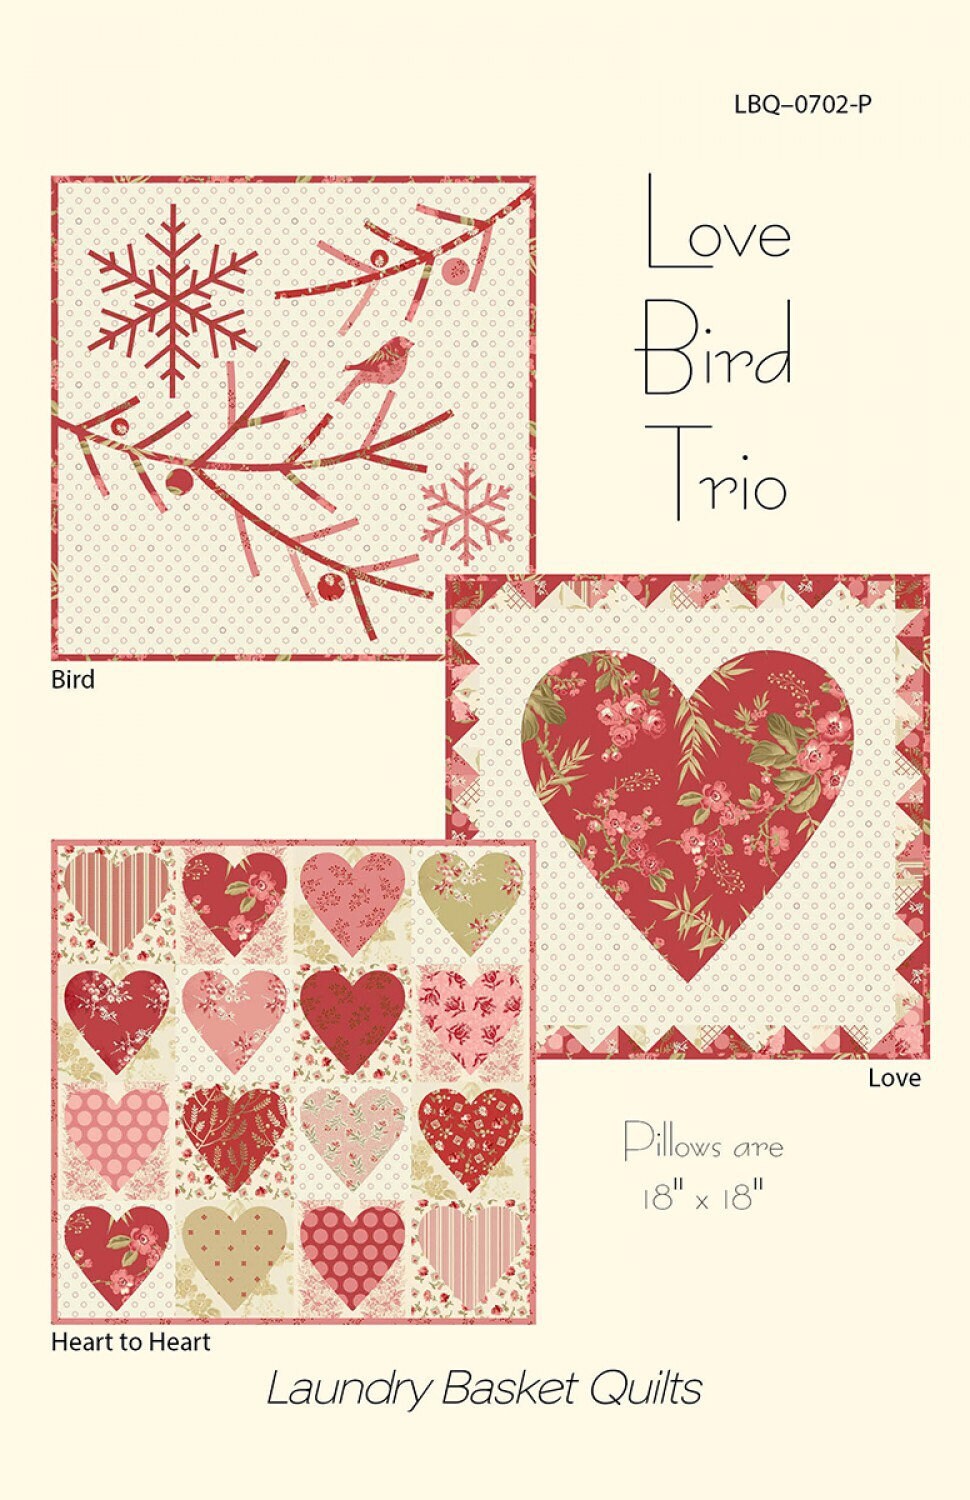 Love Bird Trio Quilted Pillow Pattern - Laundry Basket Quilts - Edyta Sitar - Heart Quilt Pattern - Valentines Day Quilt Pattern